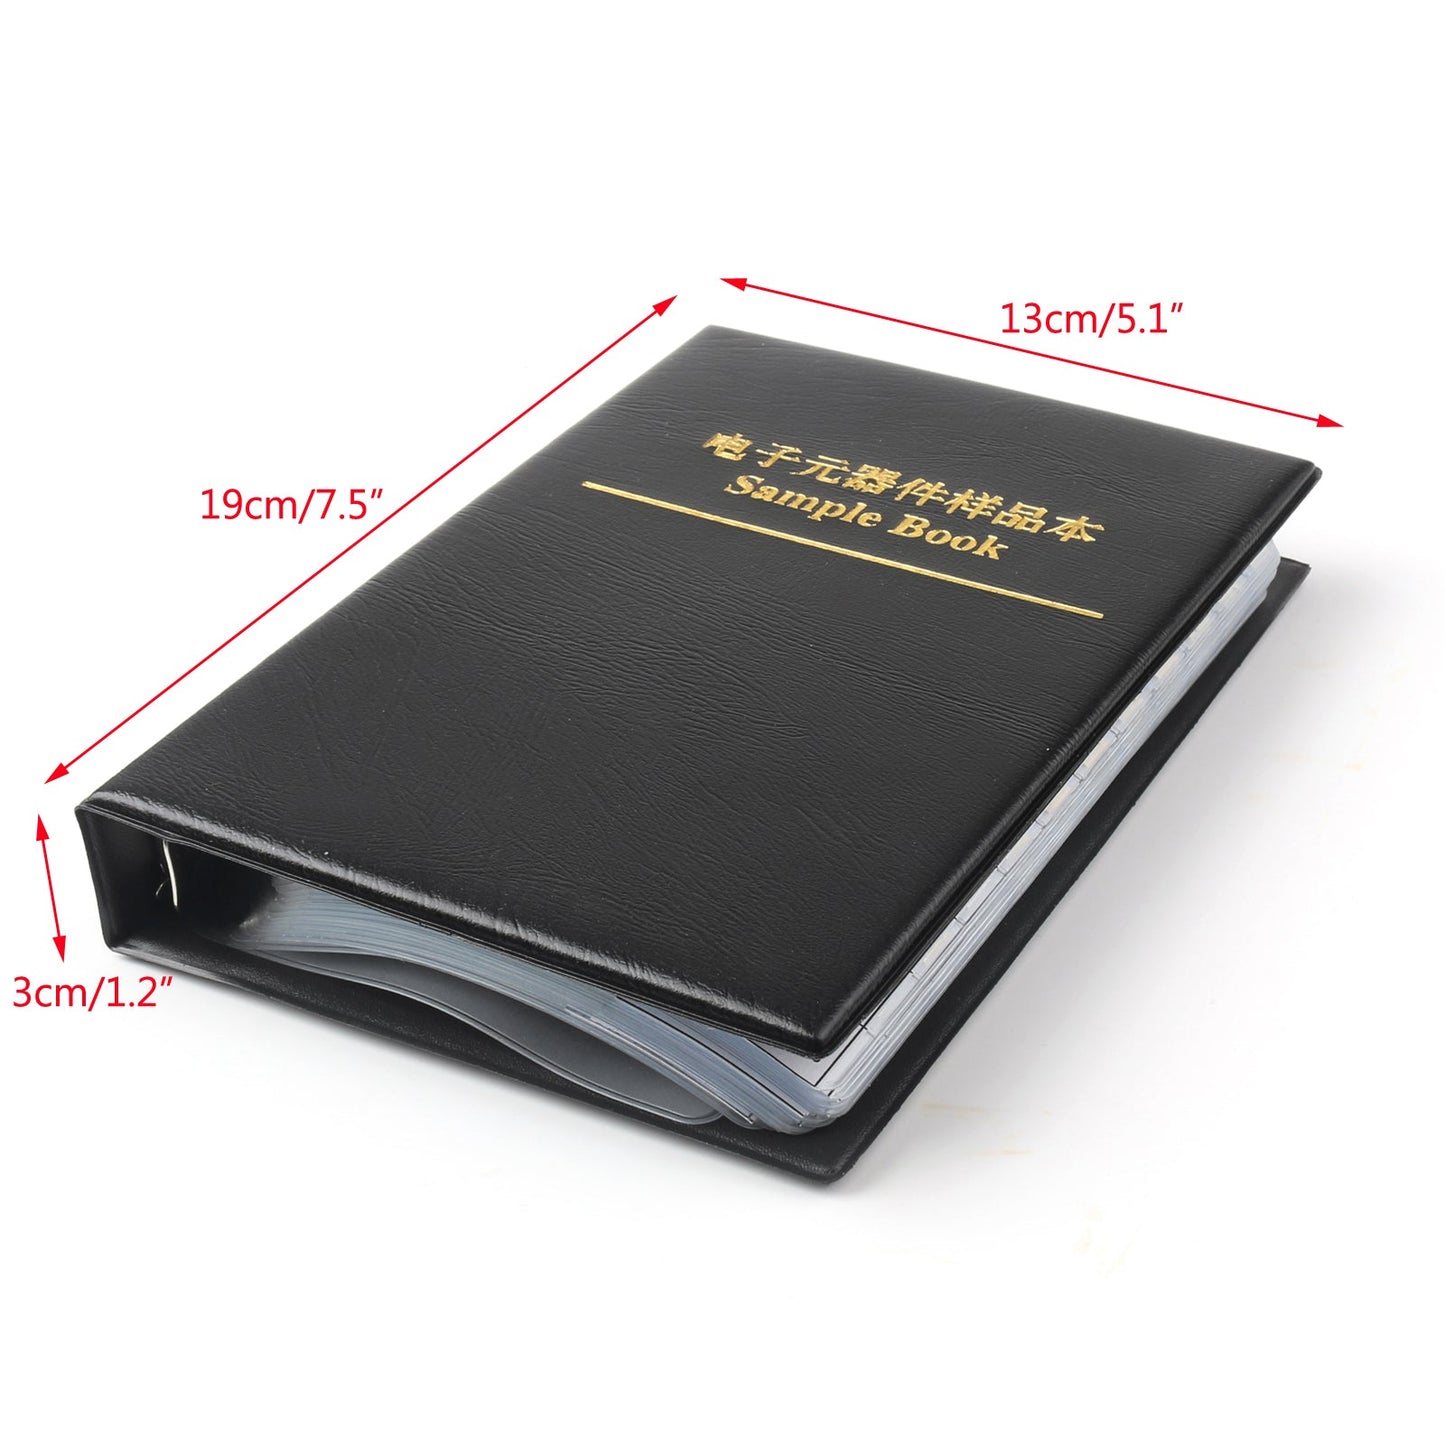 8500PCS 0201 1% SMD Chip SMT Resistor 170 Values Sample Book YAGEO DIY Kits